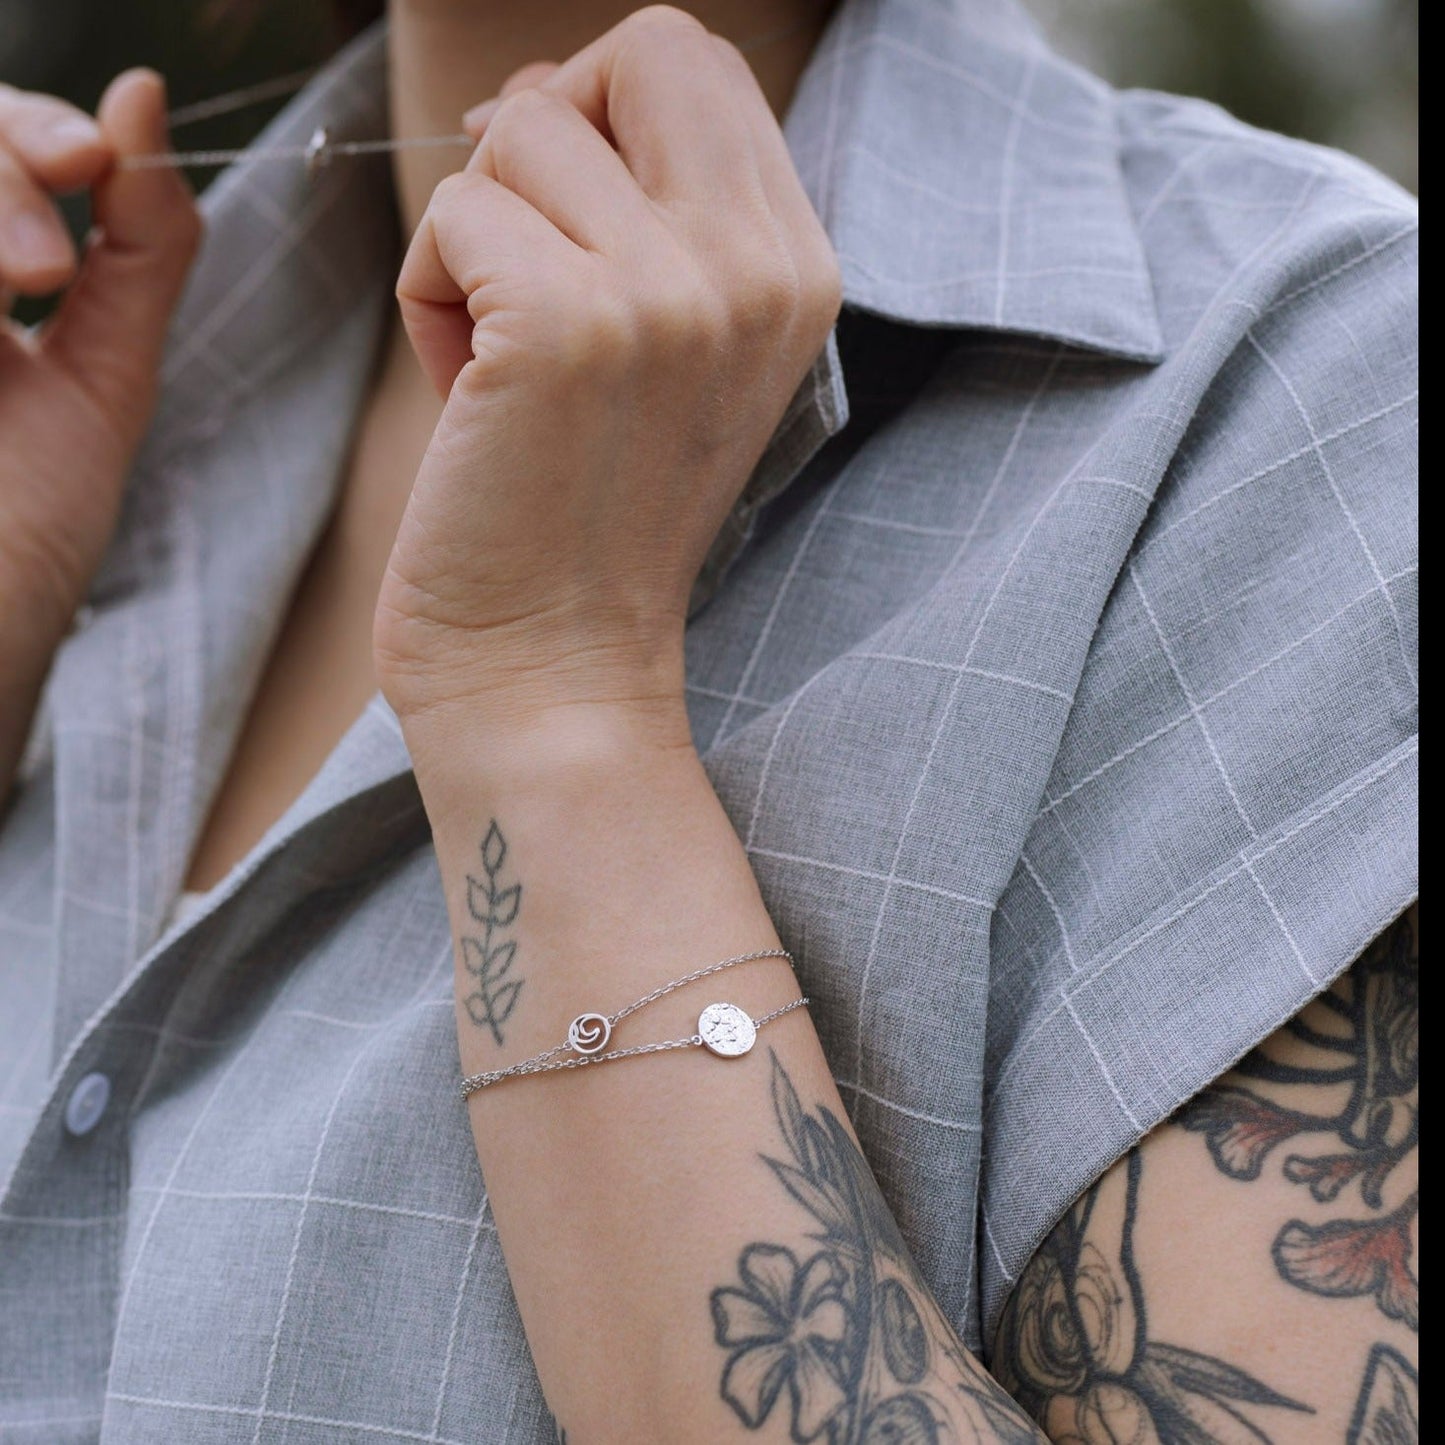 model wearing sterling silver Sol adjustable textured circle charm bracelet closeup